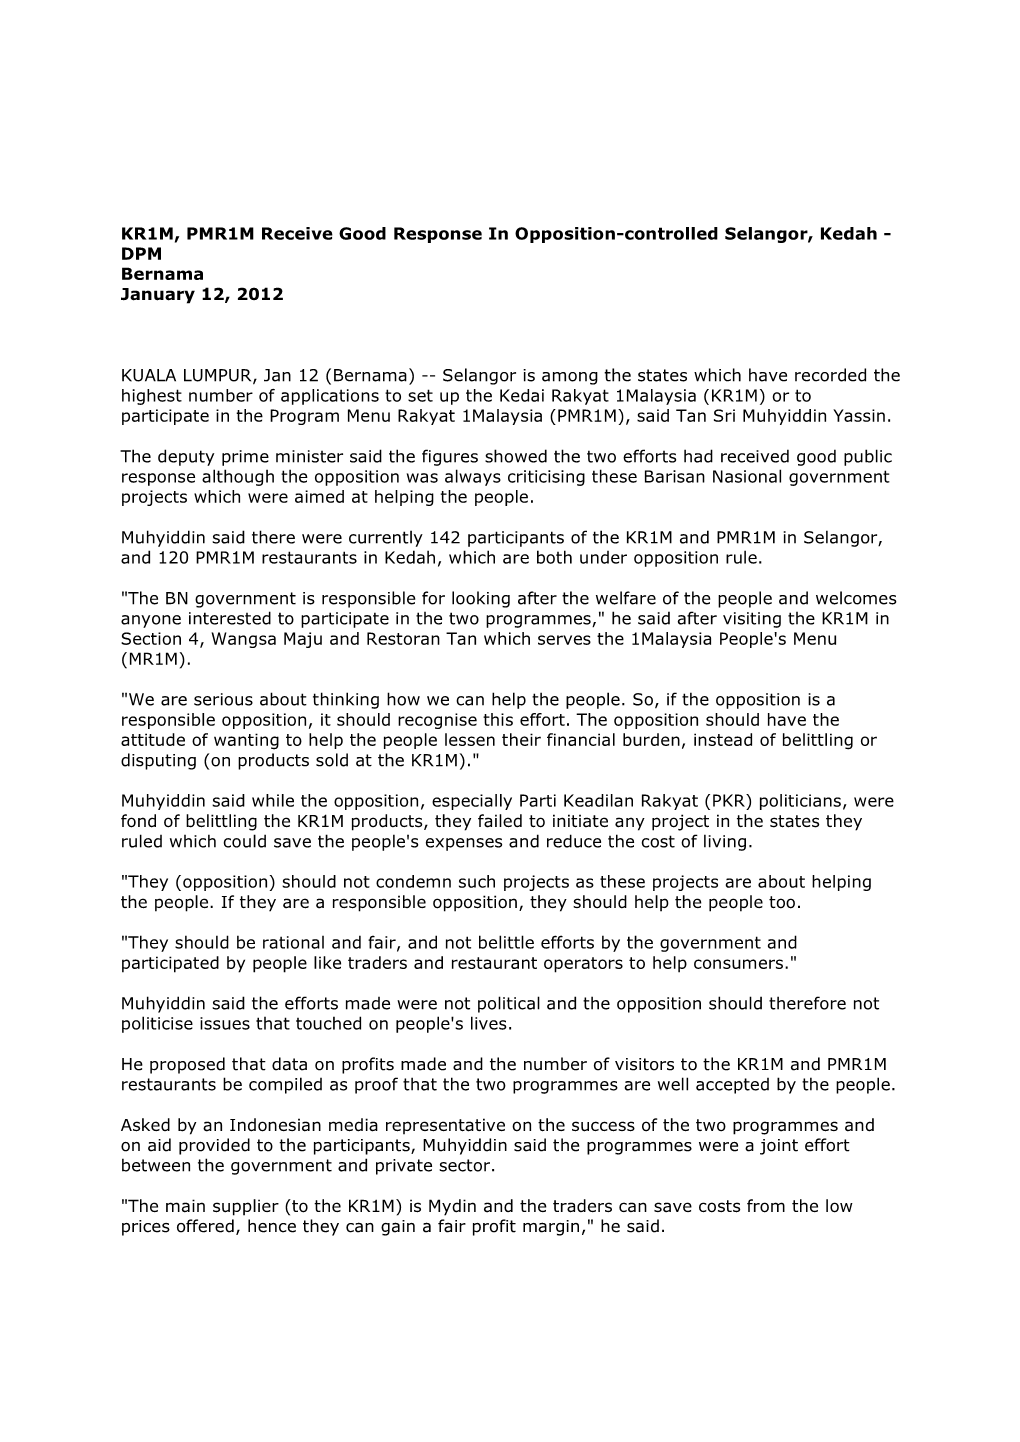 KR1M, PMR1M Receive Good Response in Opposition-Controlled Selangor, Kedah - DPM Bernama January 12, 2012